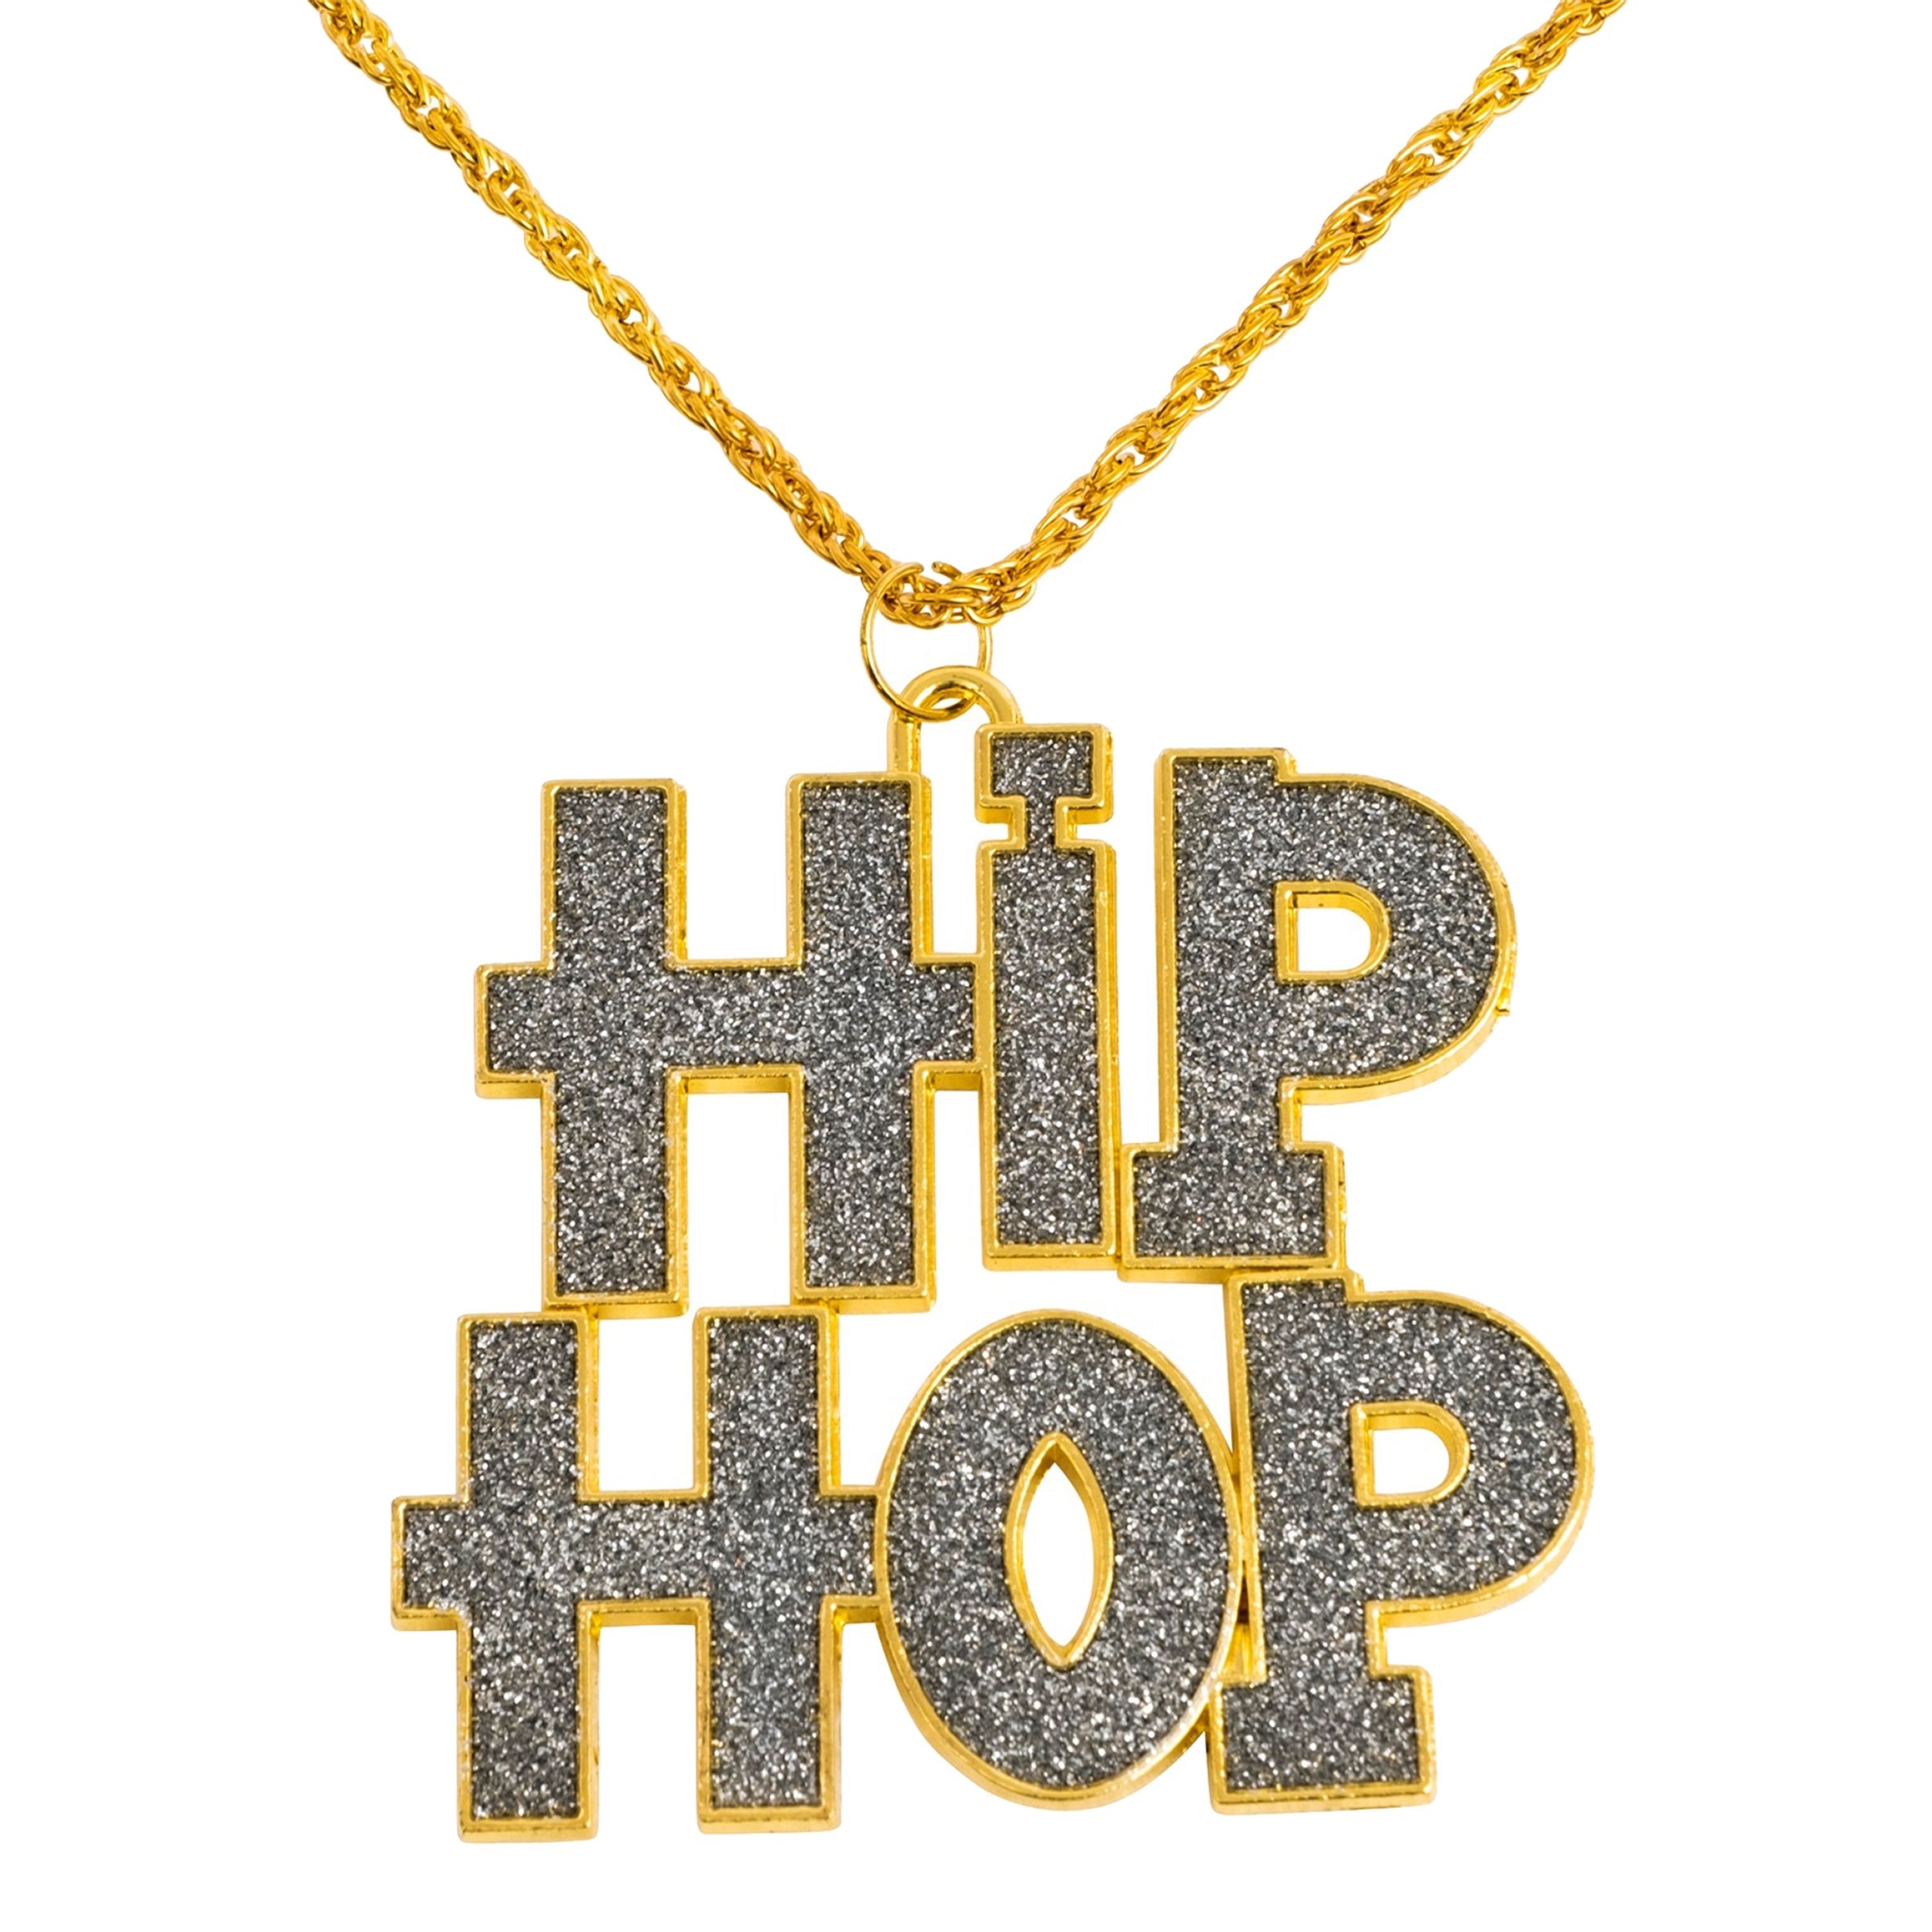 Hip Hop Halsband Guld - One size